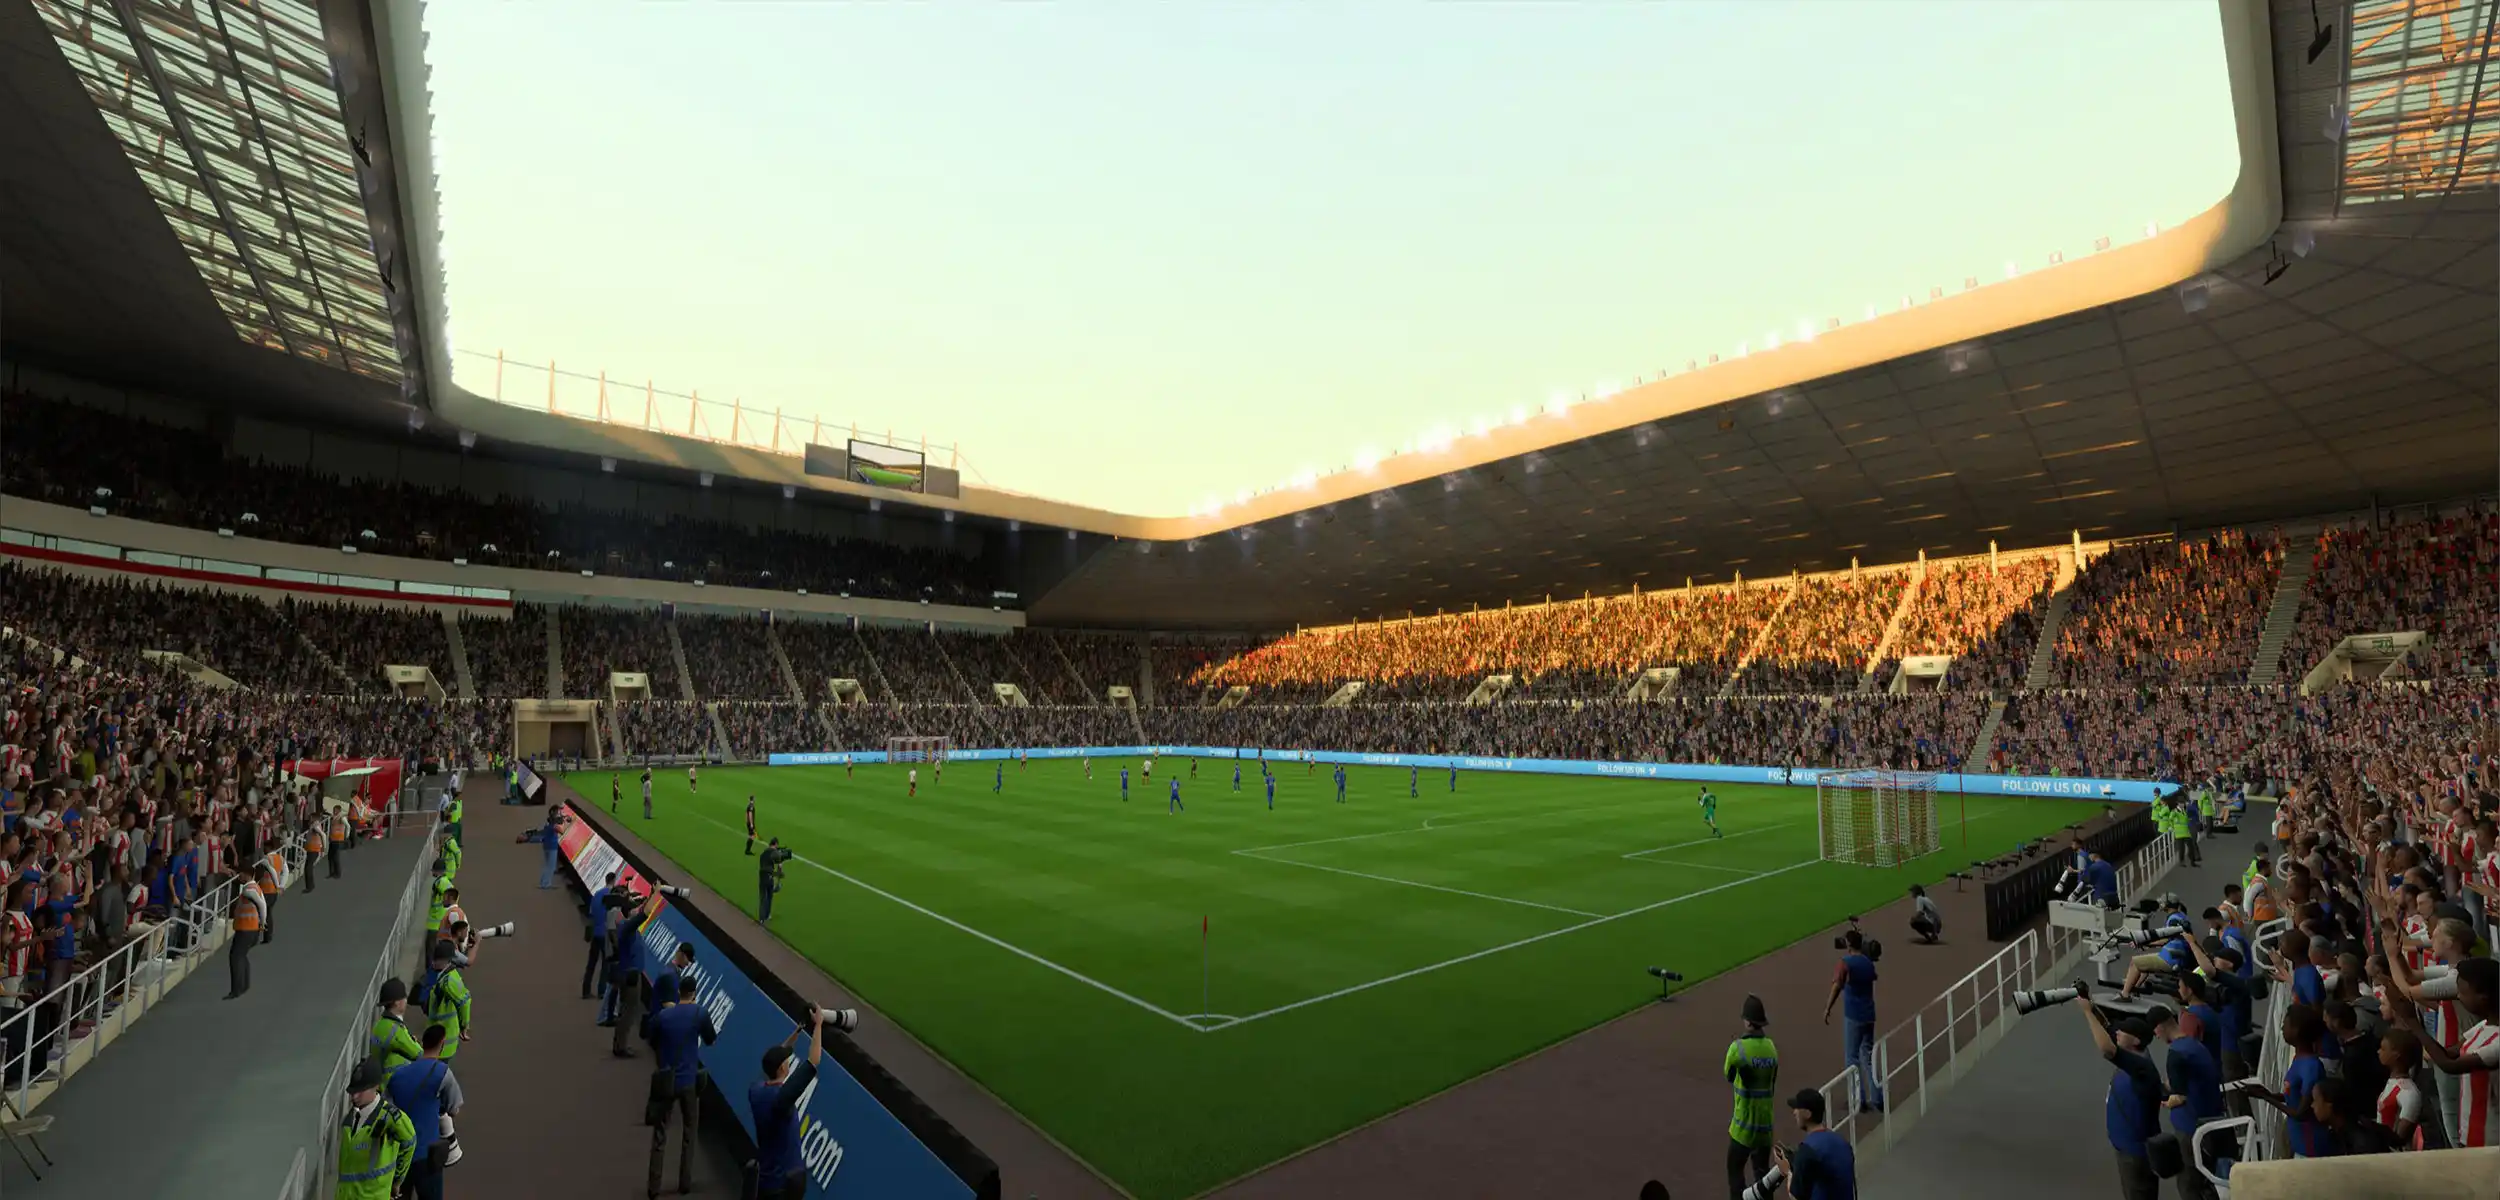 Stadium Of Light - FIFA